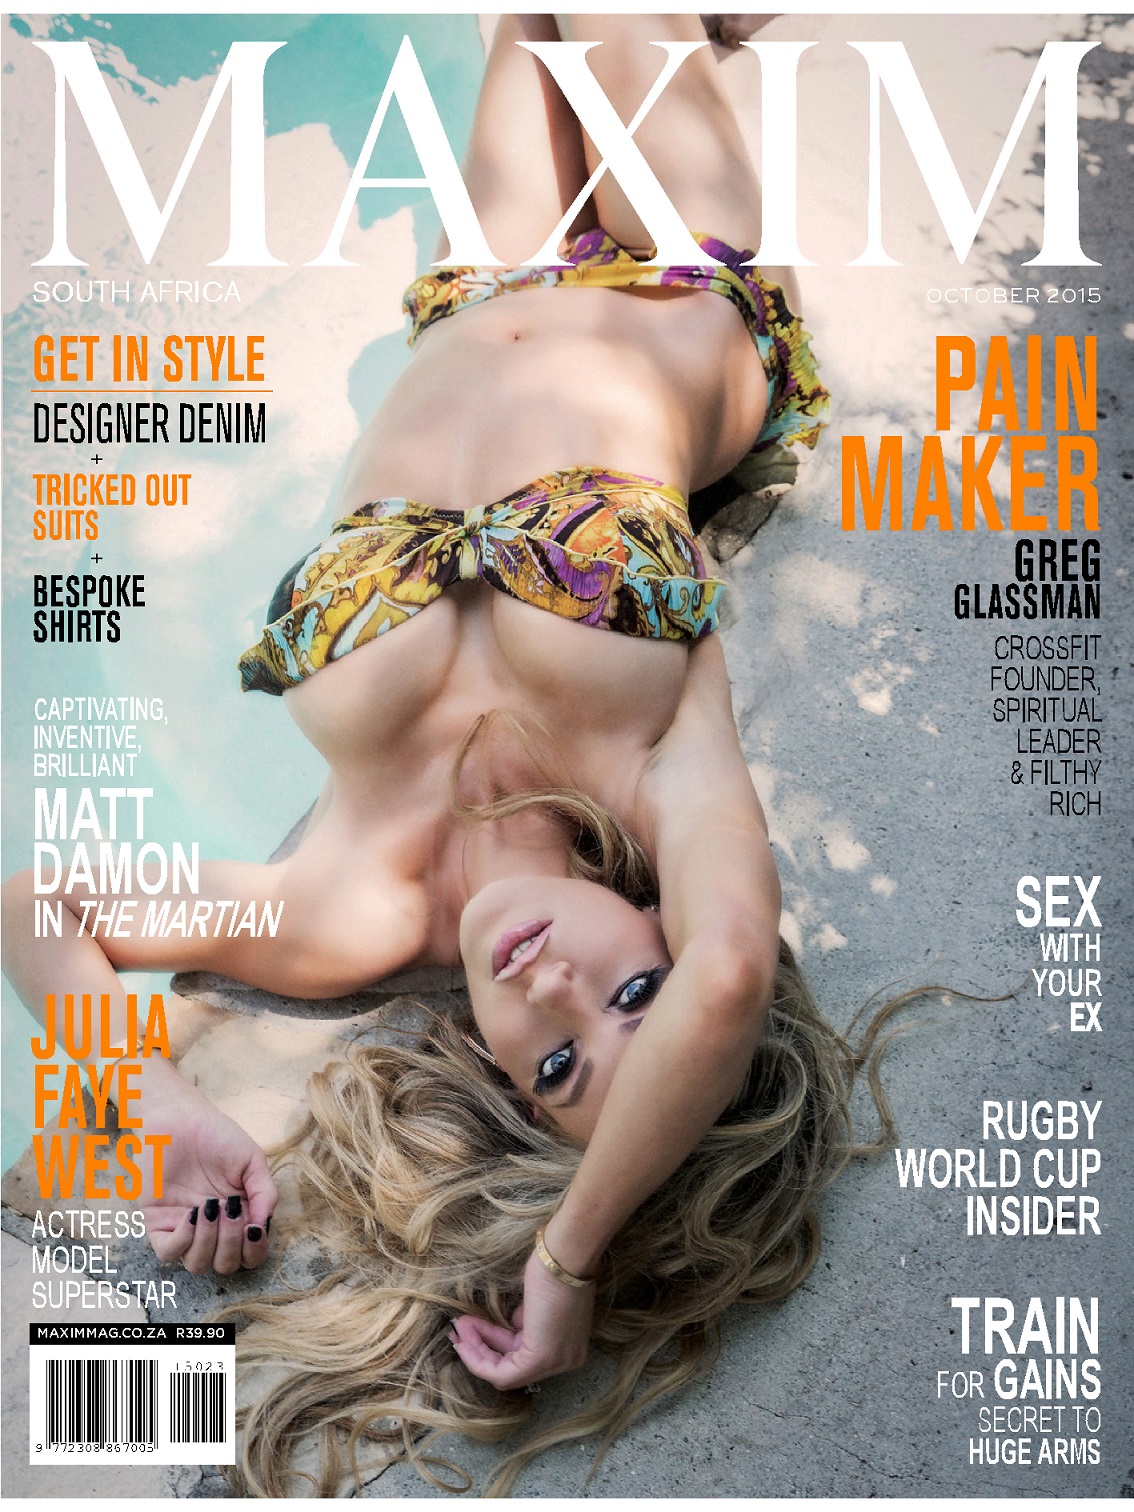 Julia Faye West for Maxim Magazine South Africa